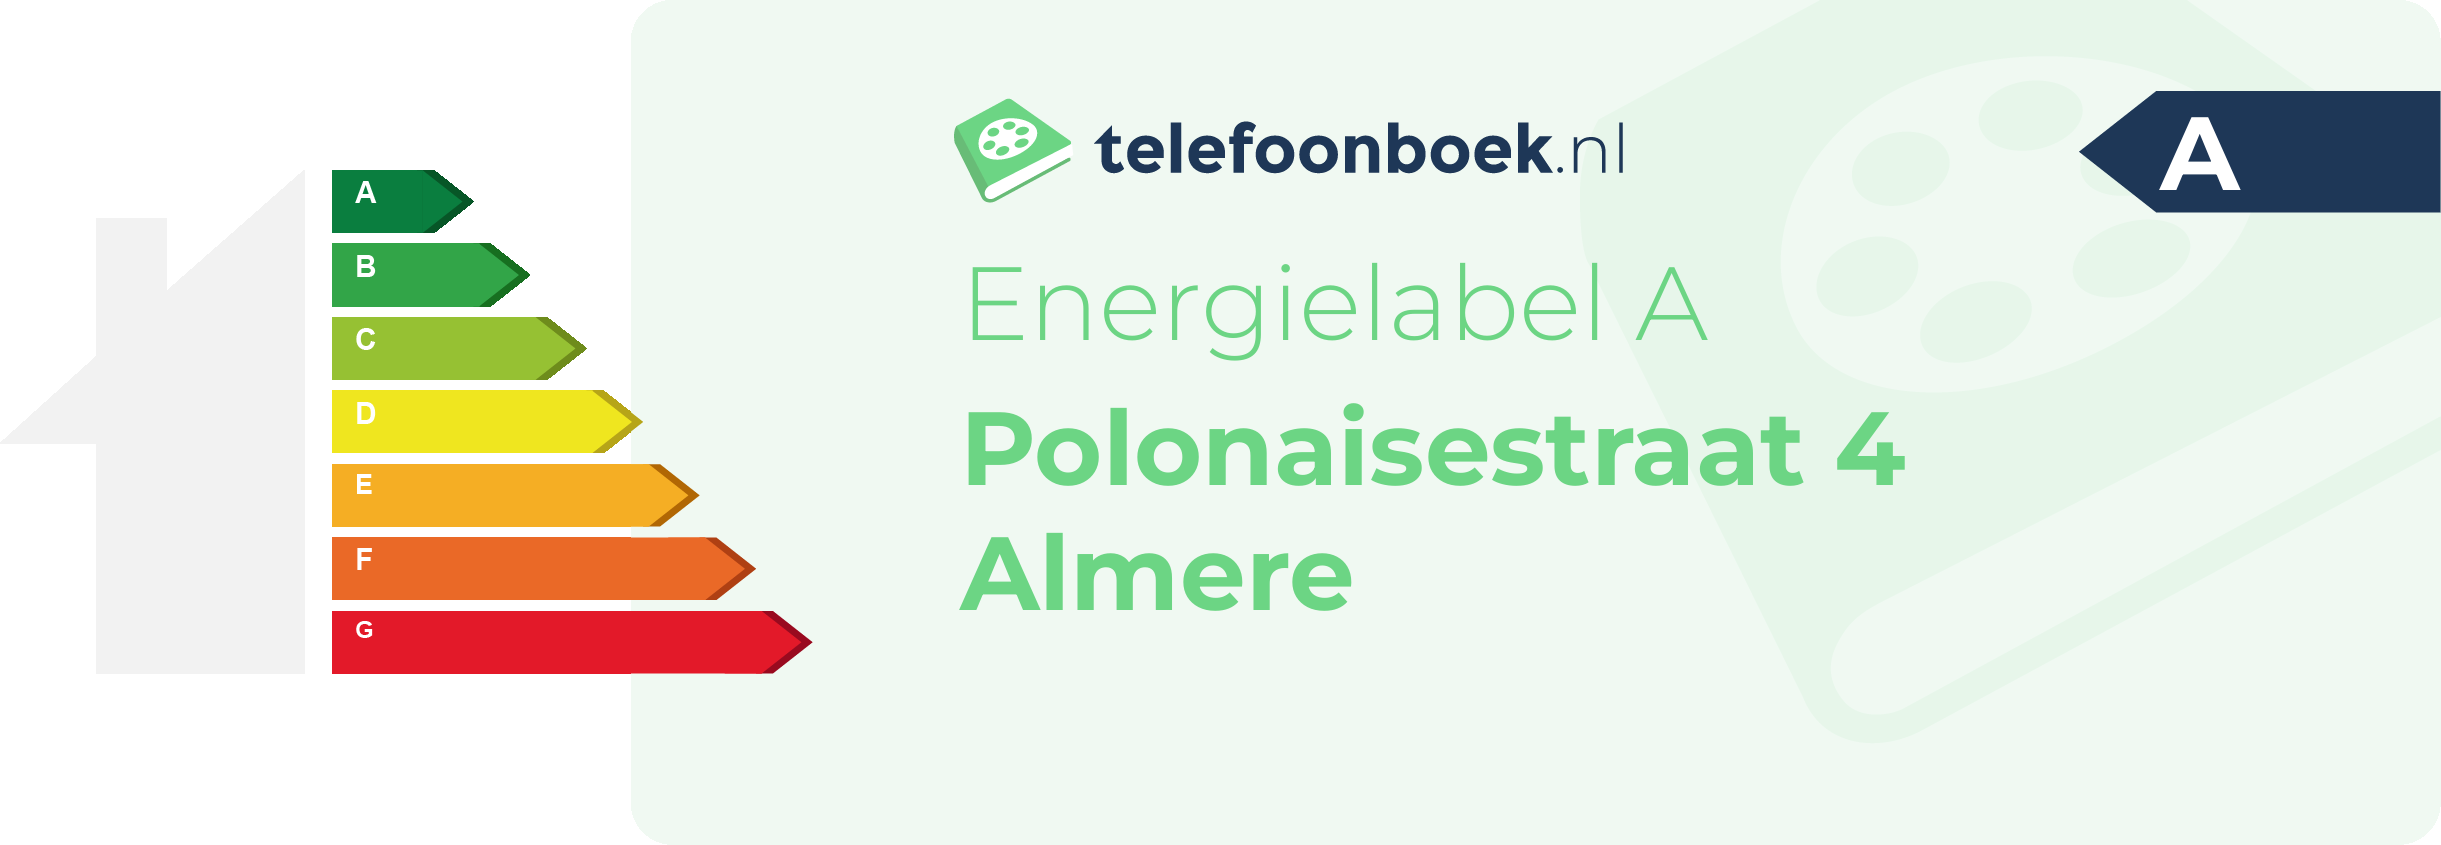 Energielabel Polonaisestraat 4 Almere